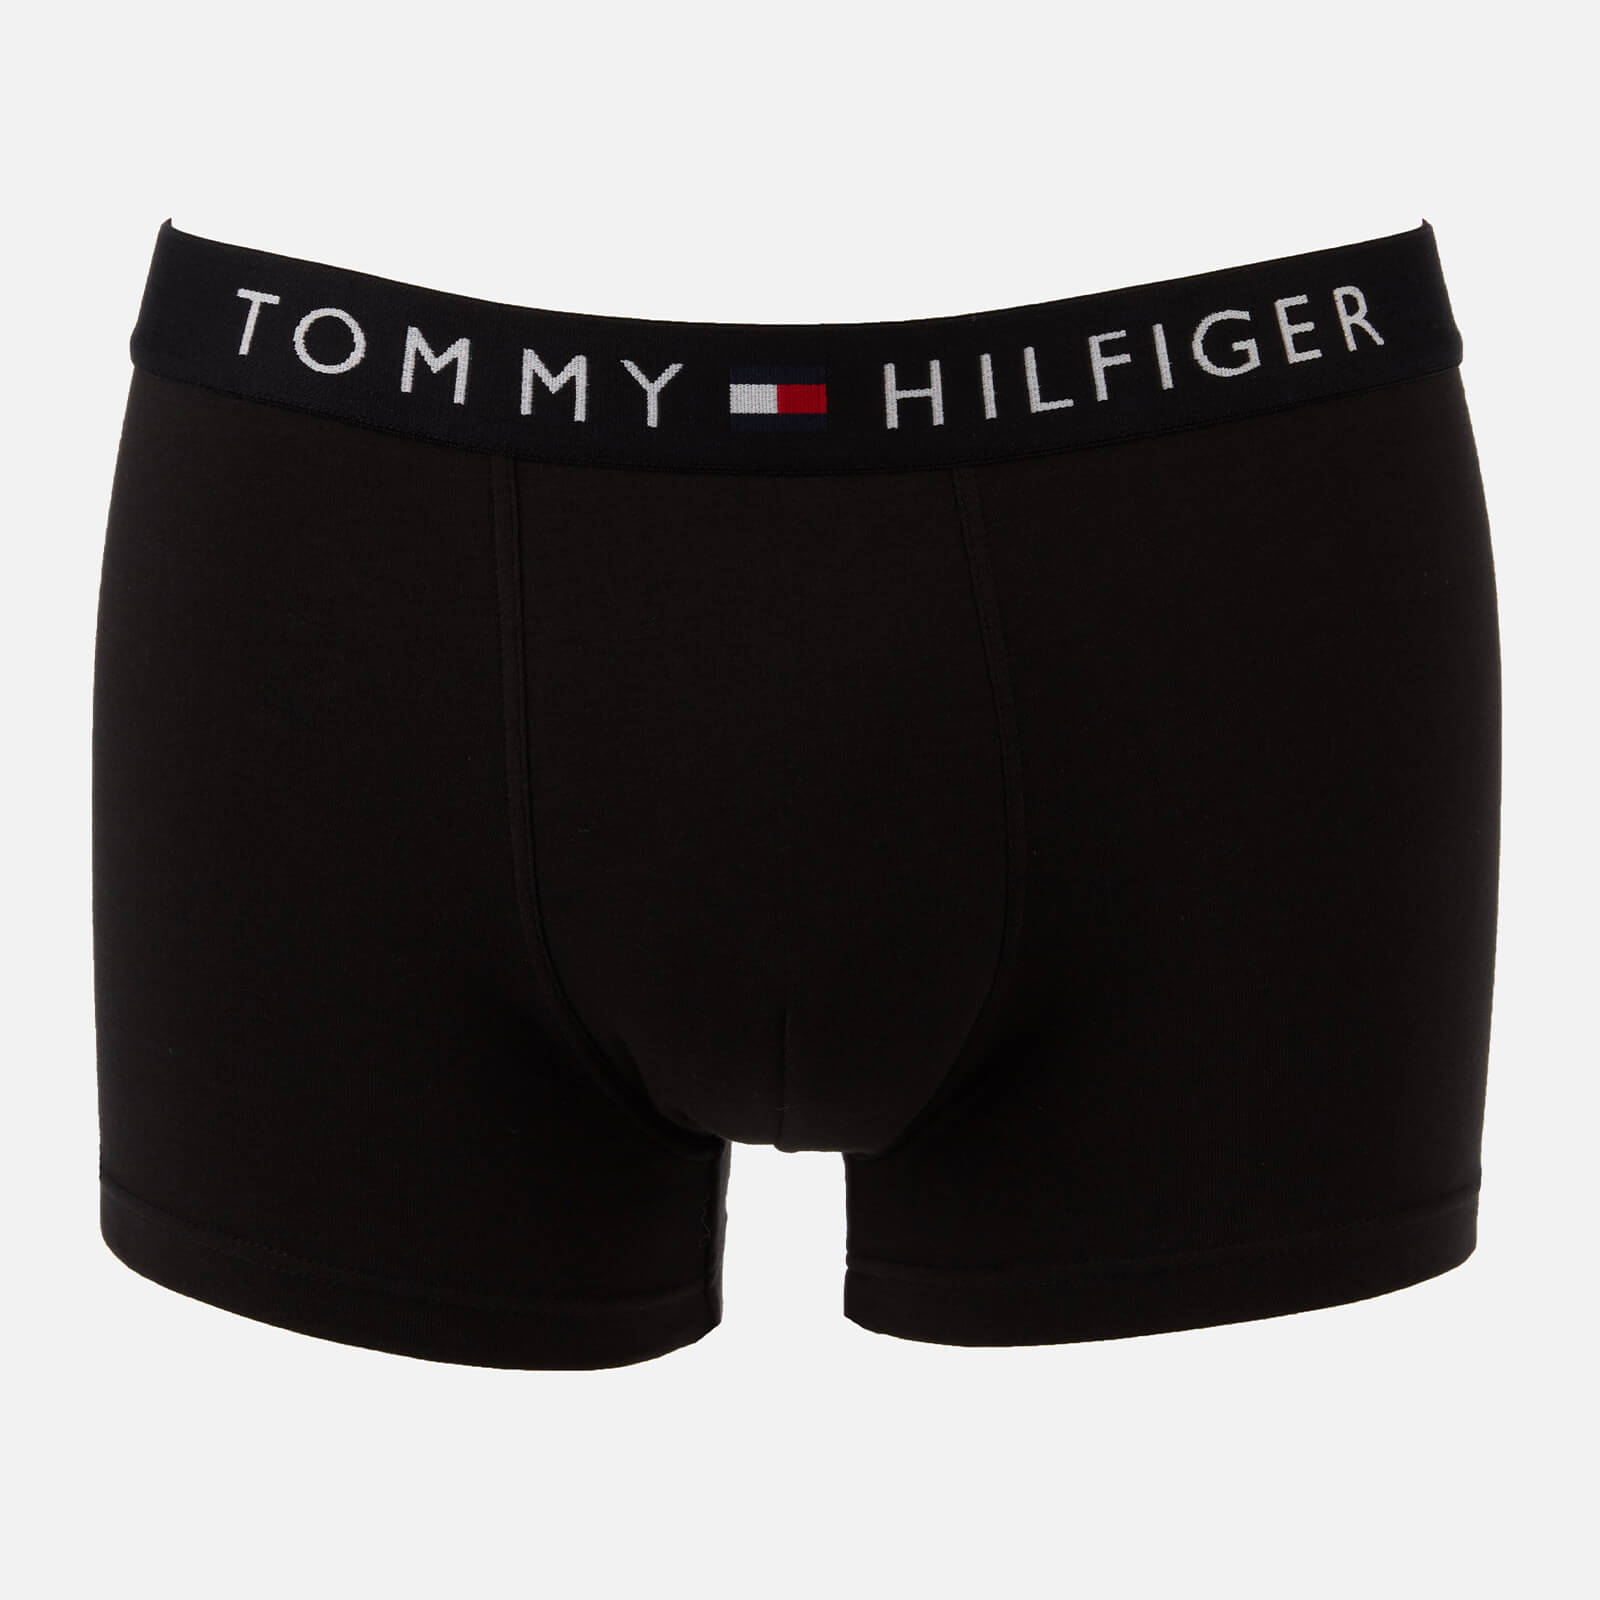 Tommy Hilfiger Men's Tommy Original Cotton Trunks - Black - M